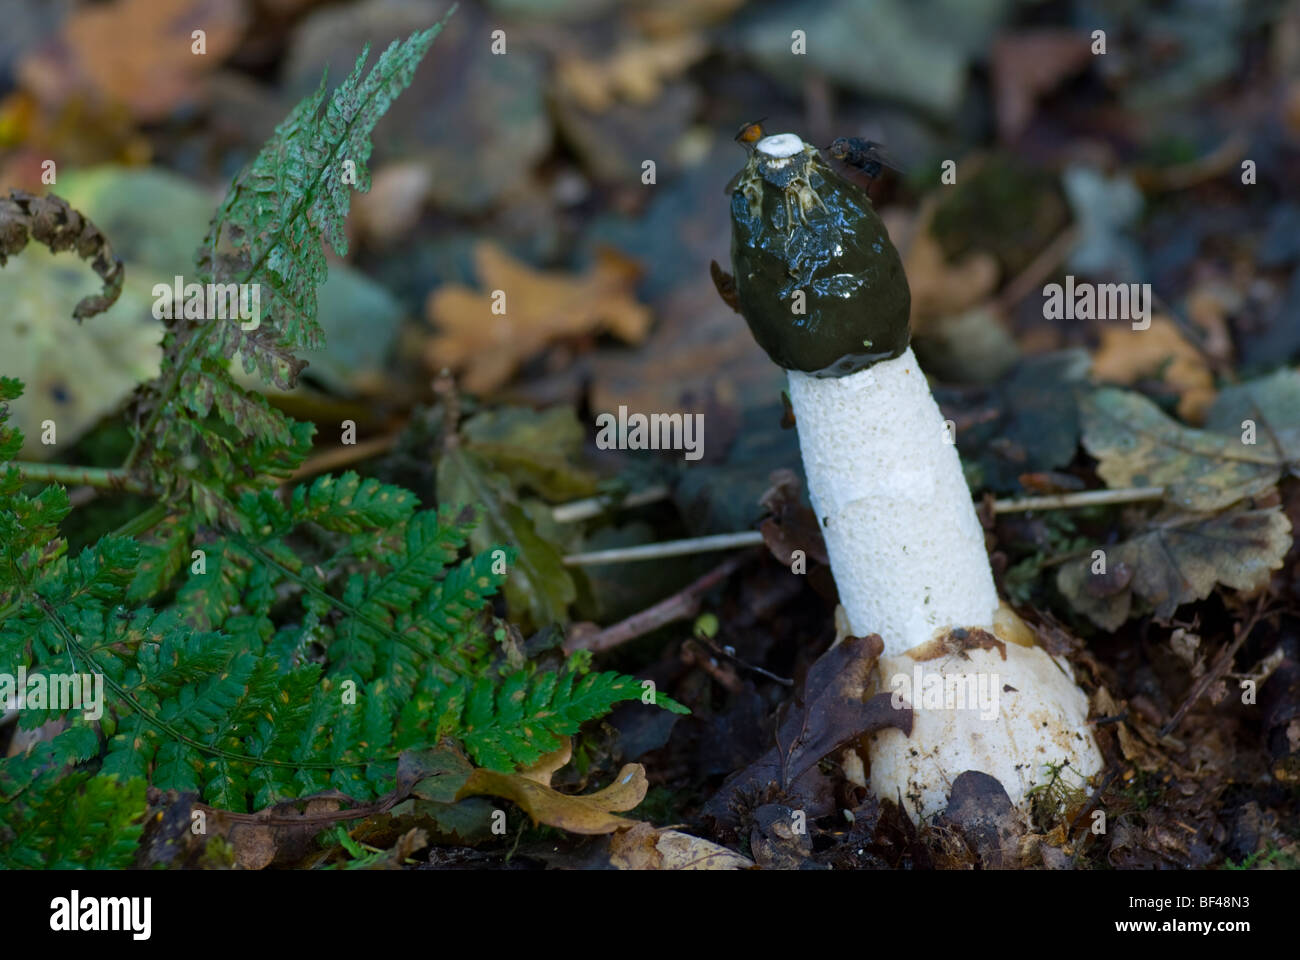 The common stinkhorn fungus (Phallus impudicus) Stock Photo